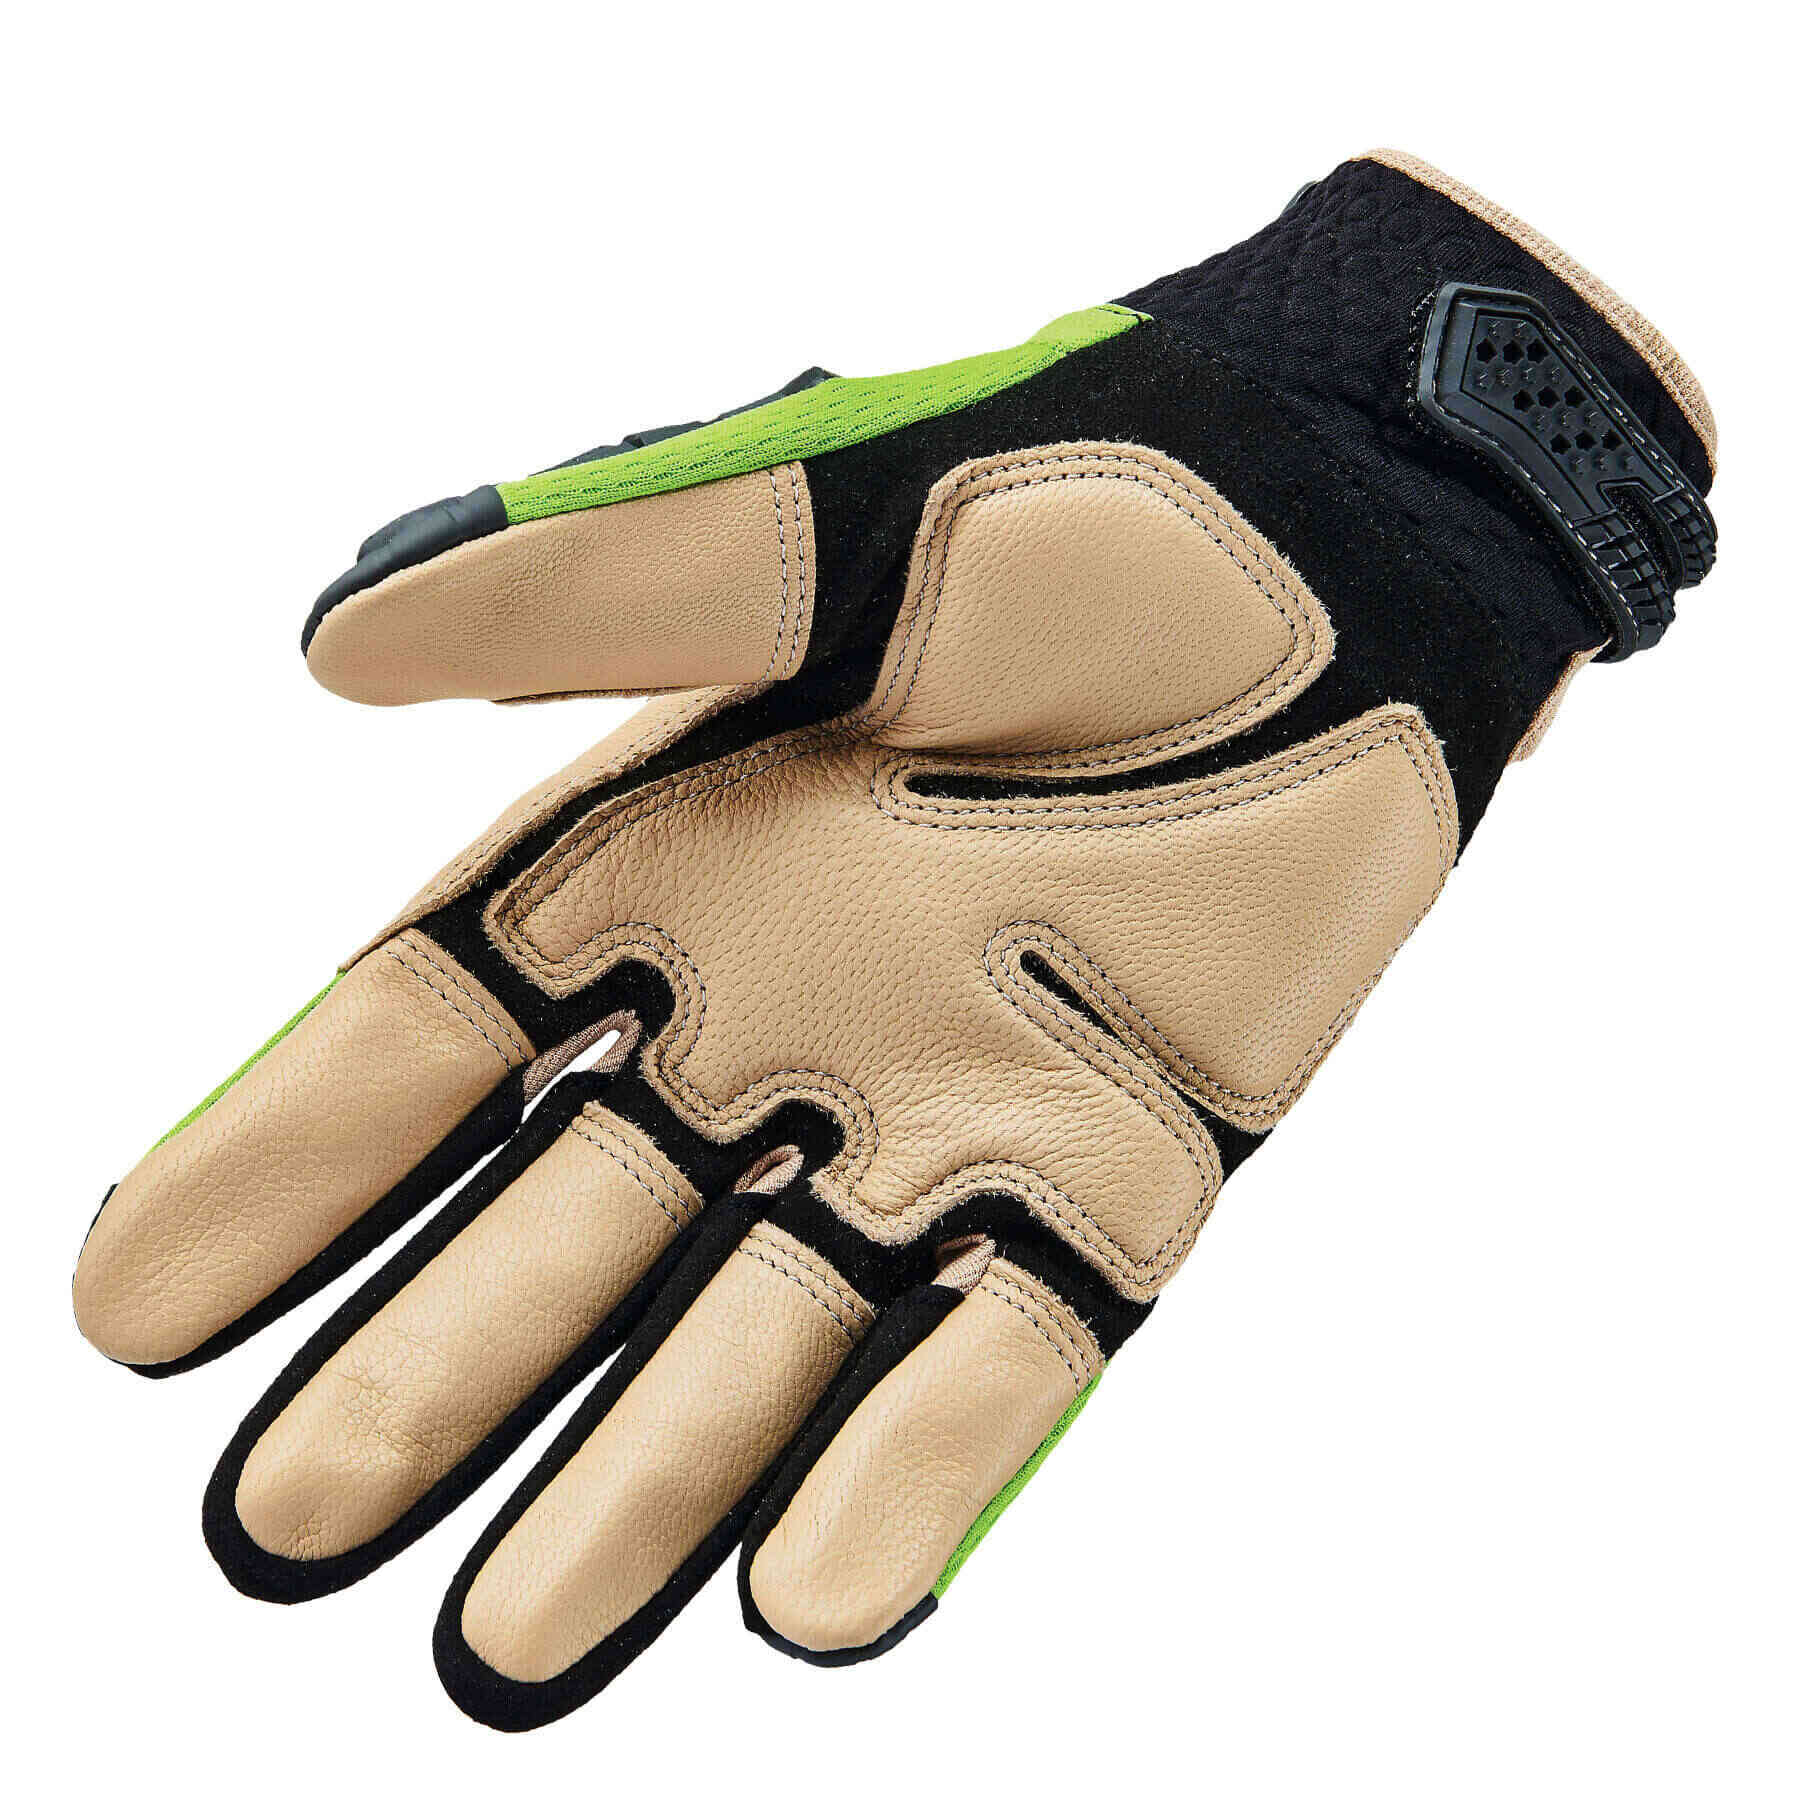 Leather-Reinforced Hybrid DIR Gloves